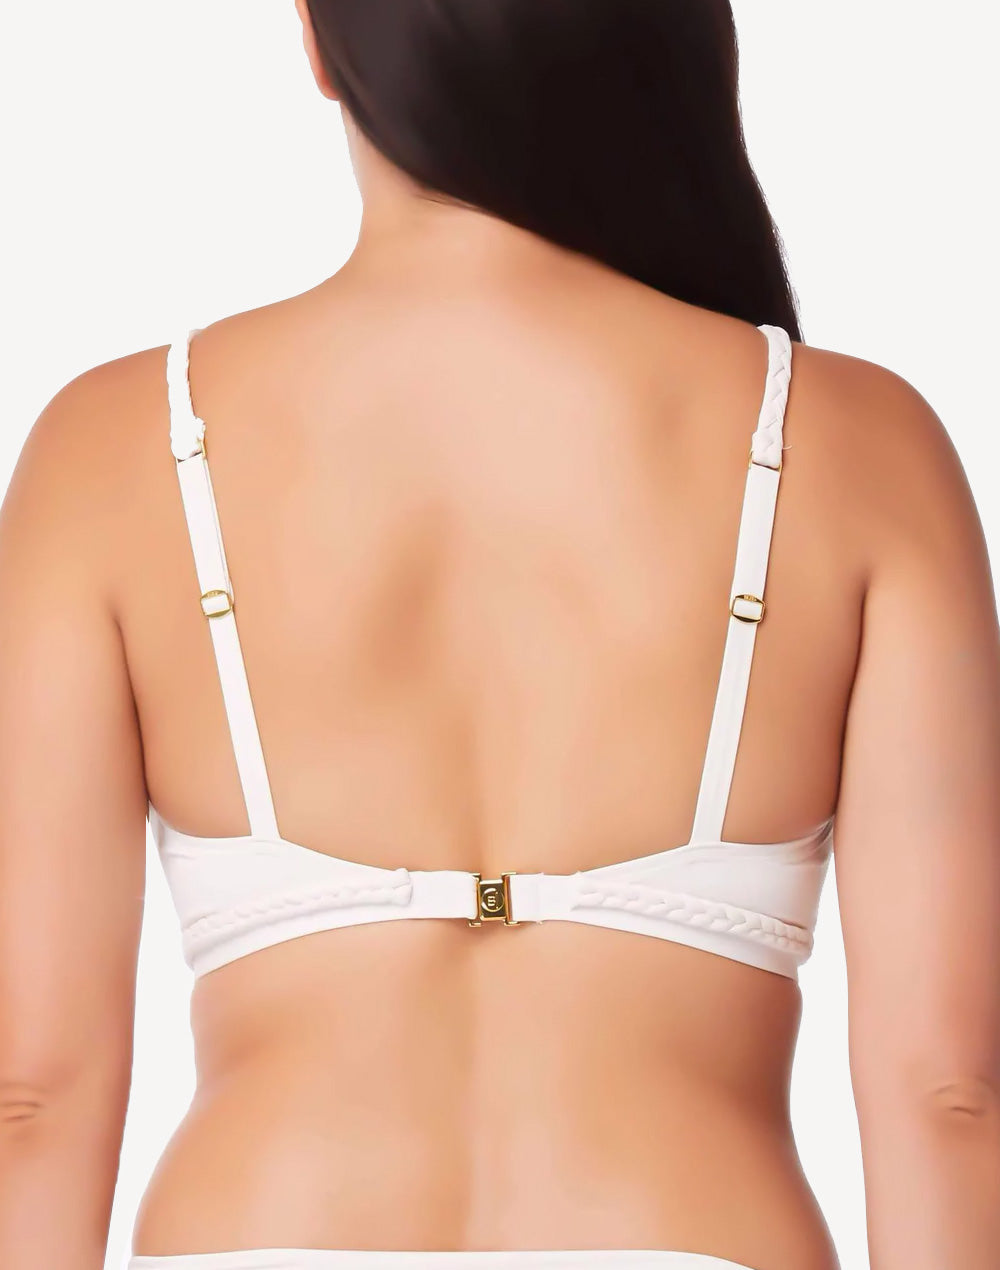 Glam Stand Braided Underwire Crop Bikini Top#color_white